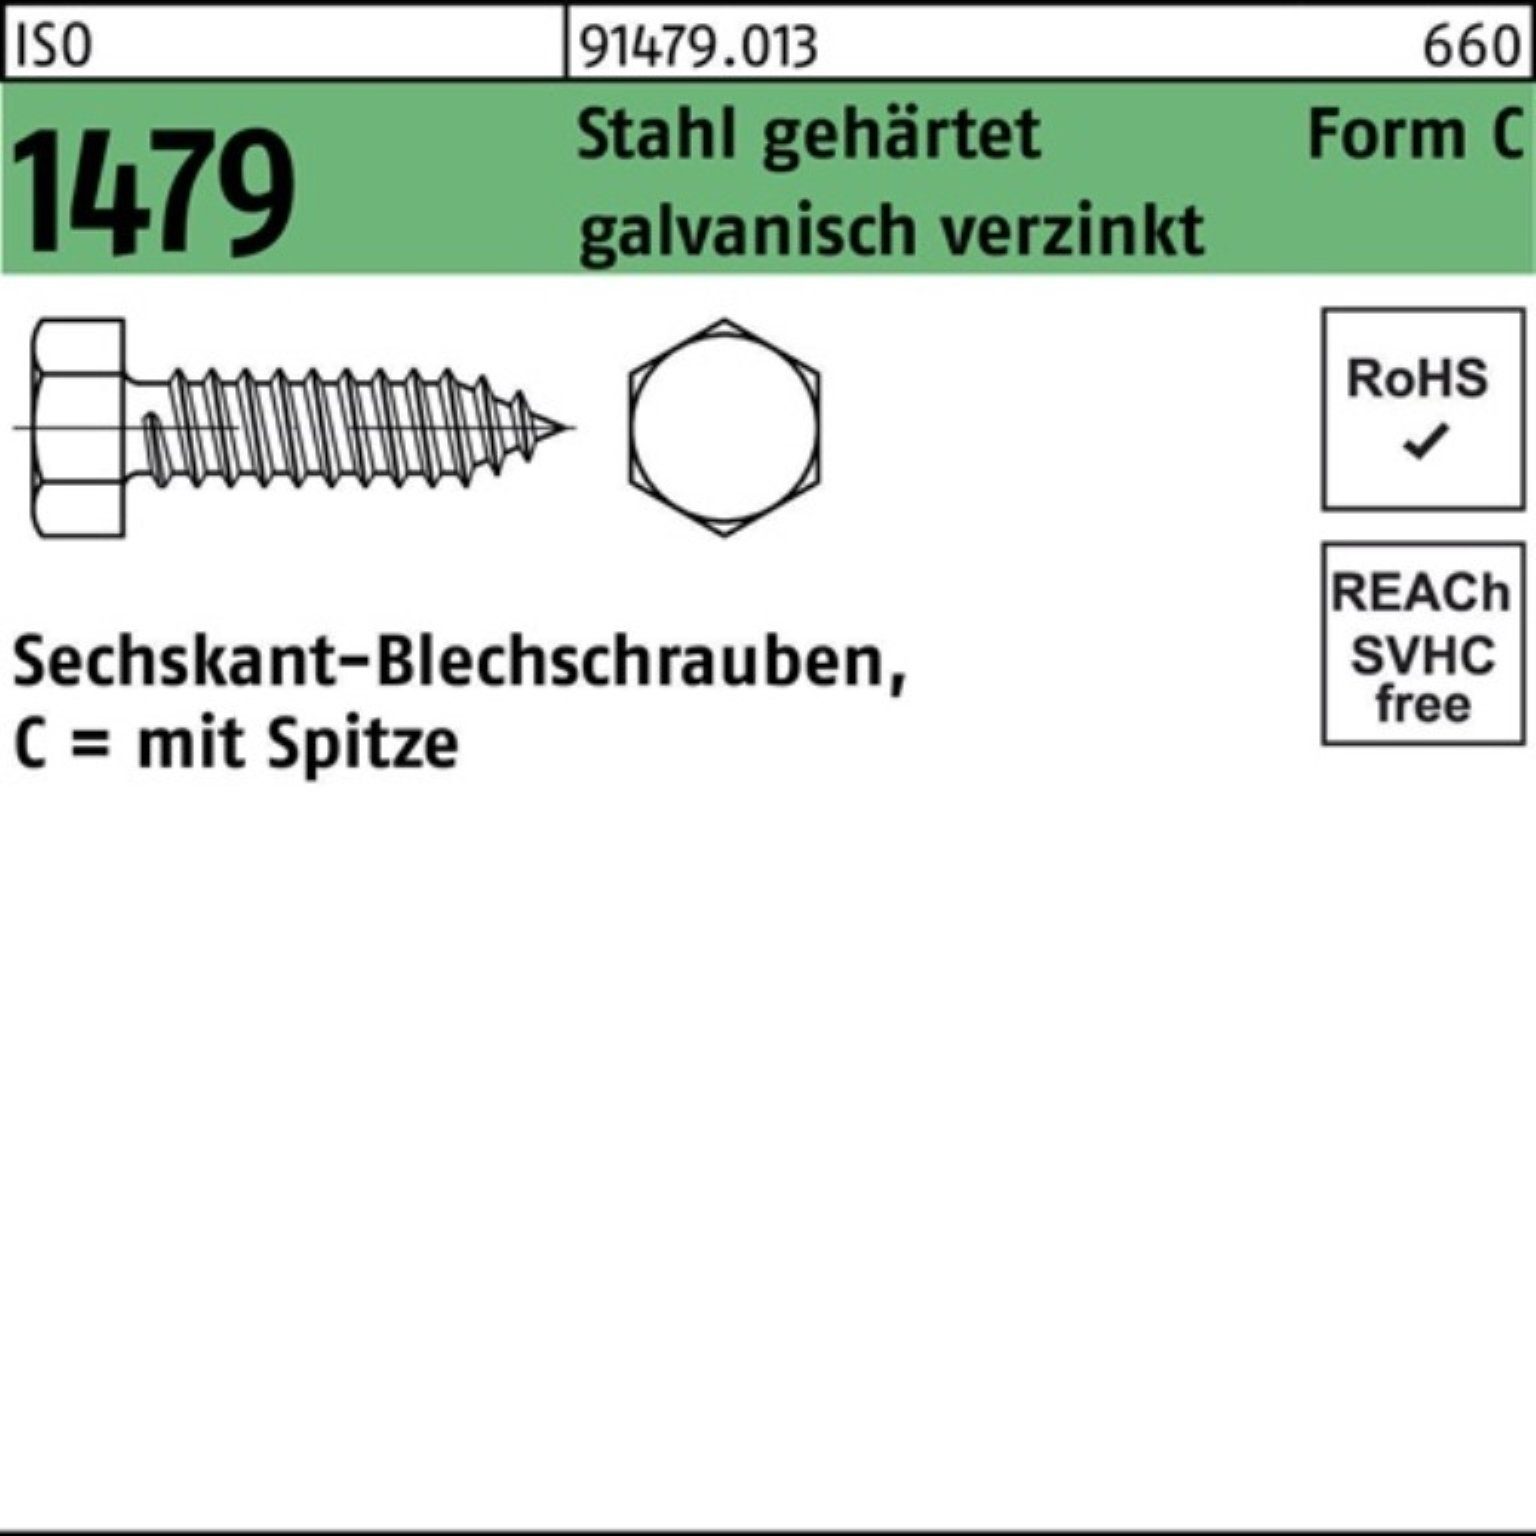 Reyher Blechschraube Spitze/6-kt Pack C 250er 5,5x38 Blechschraube 1479 gehärtet Stahl ISO